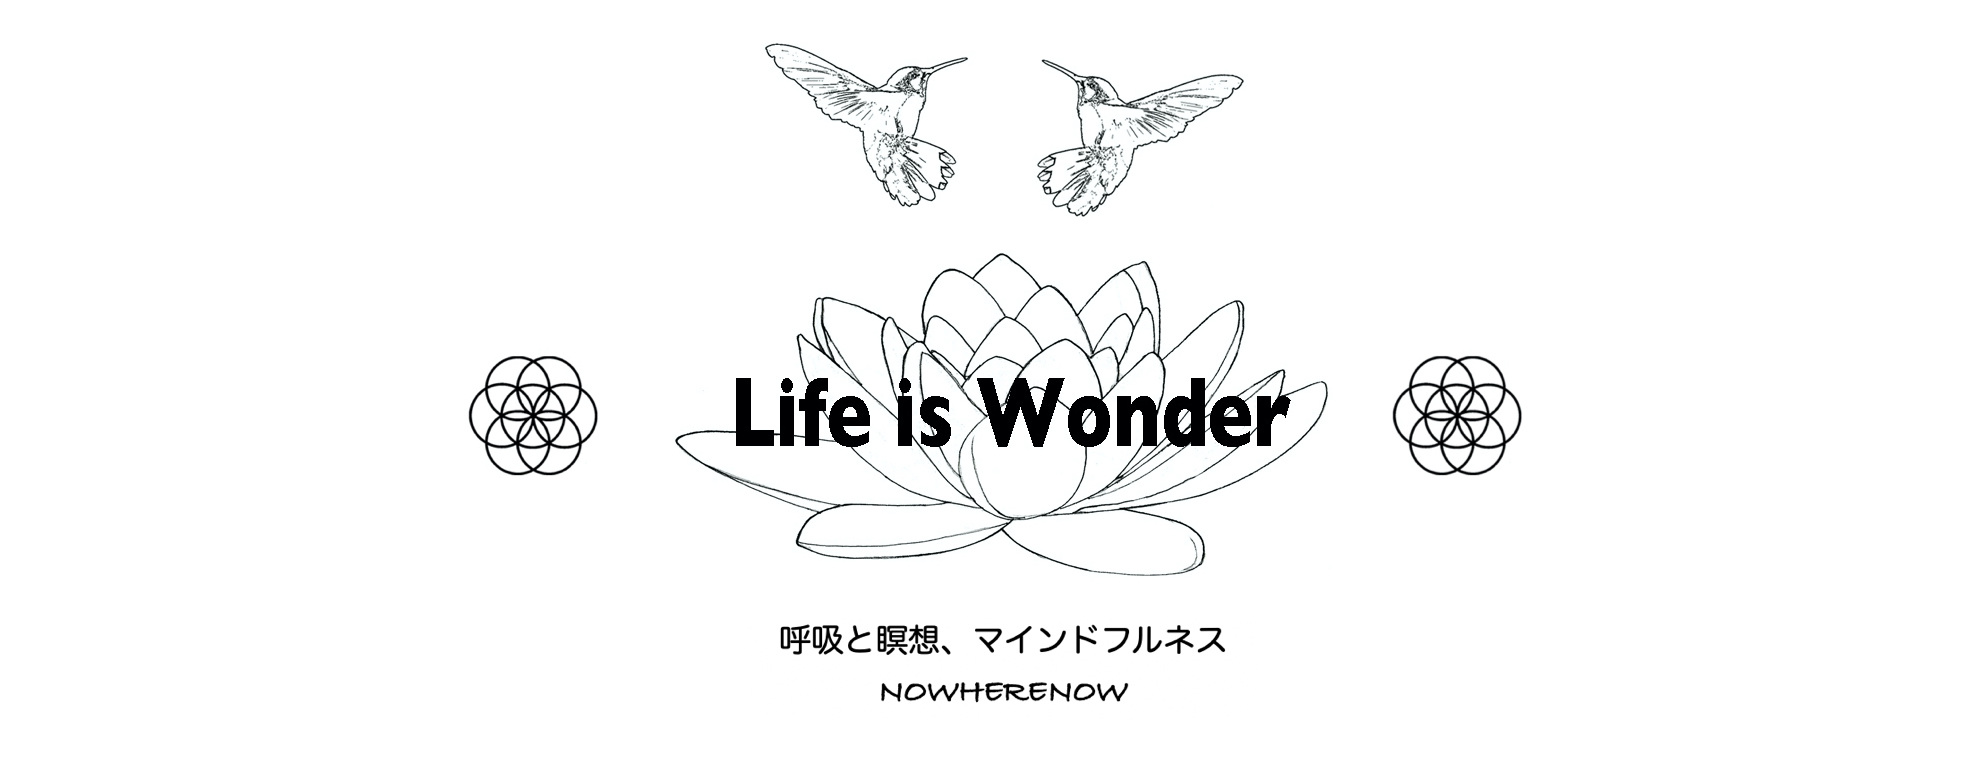 Life is Wonder